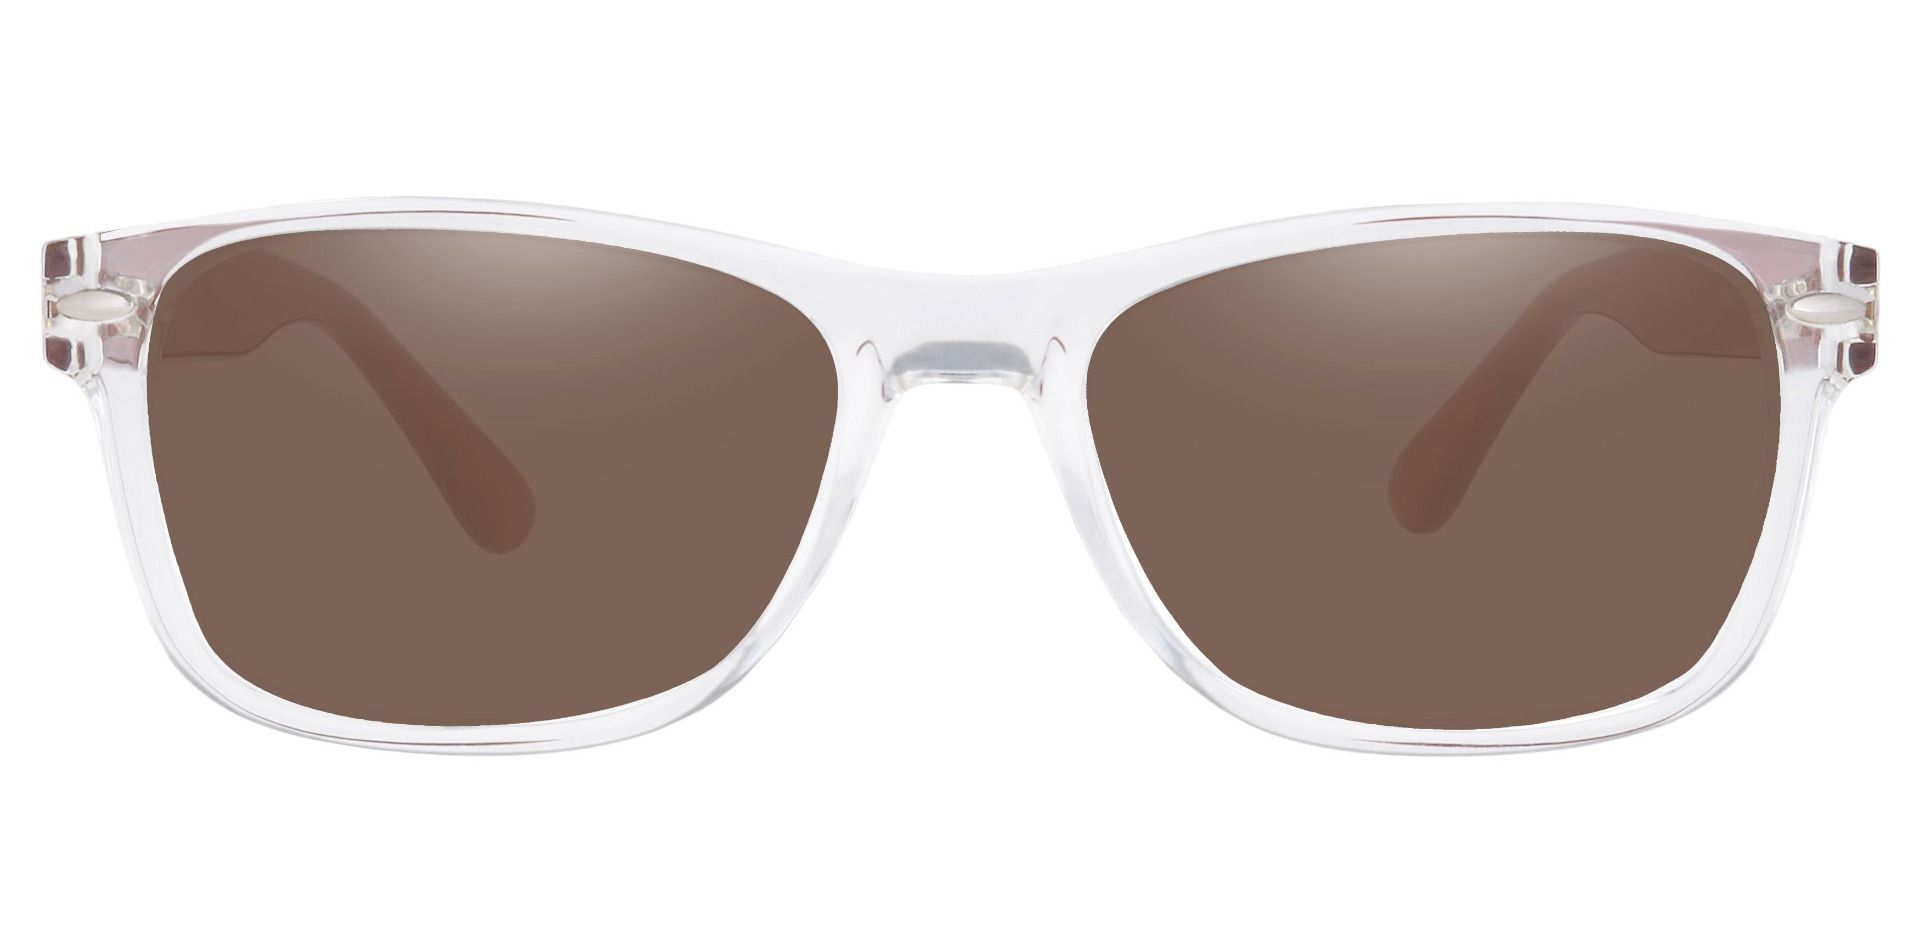 Kent Rectangle Prescription Sunglasses - Clear Frame With Brown Lenses